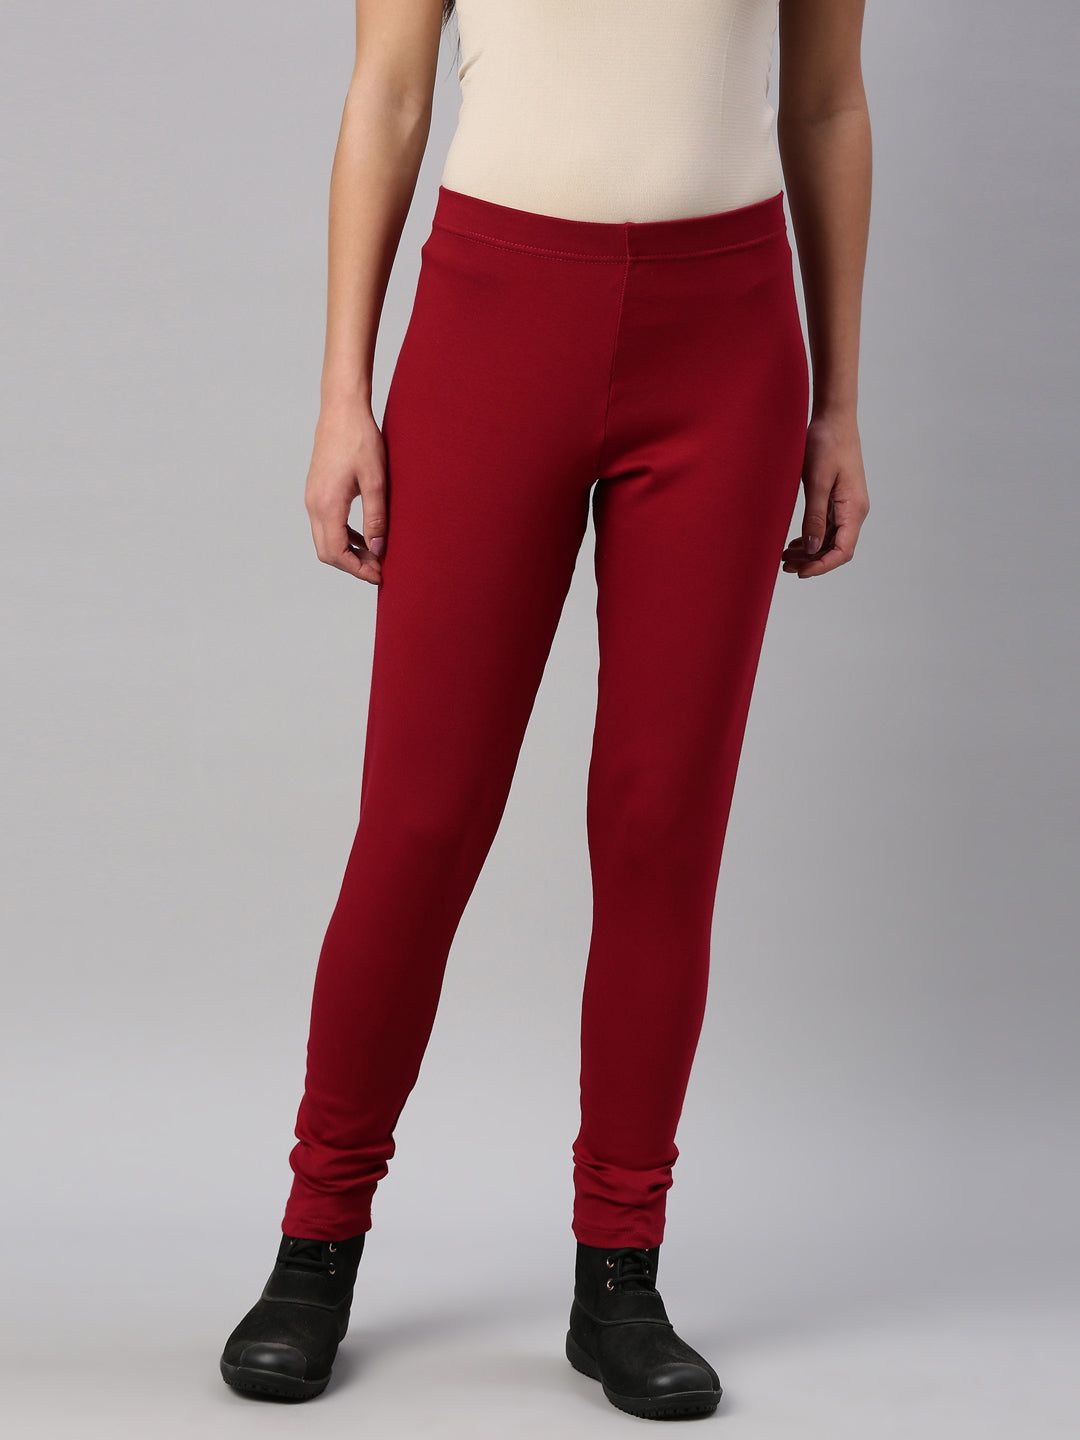 Latest & Stylish Shiny Red Shining Shimmer Leggings for Women & Girls